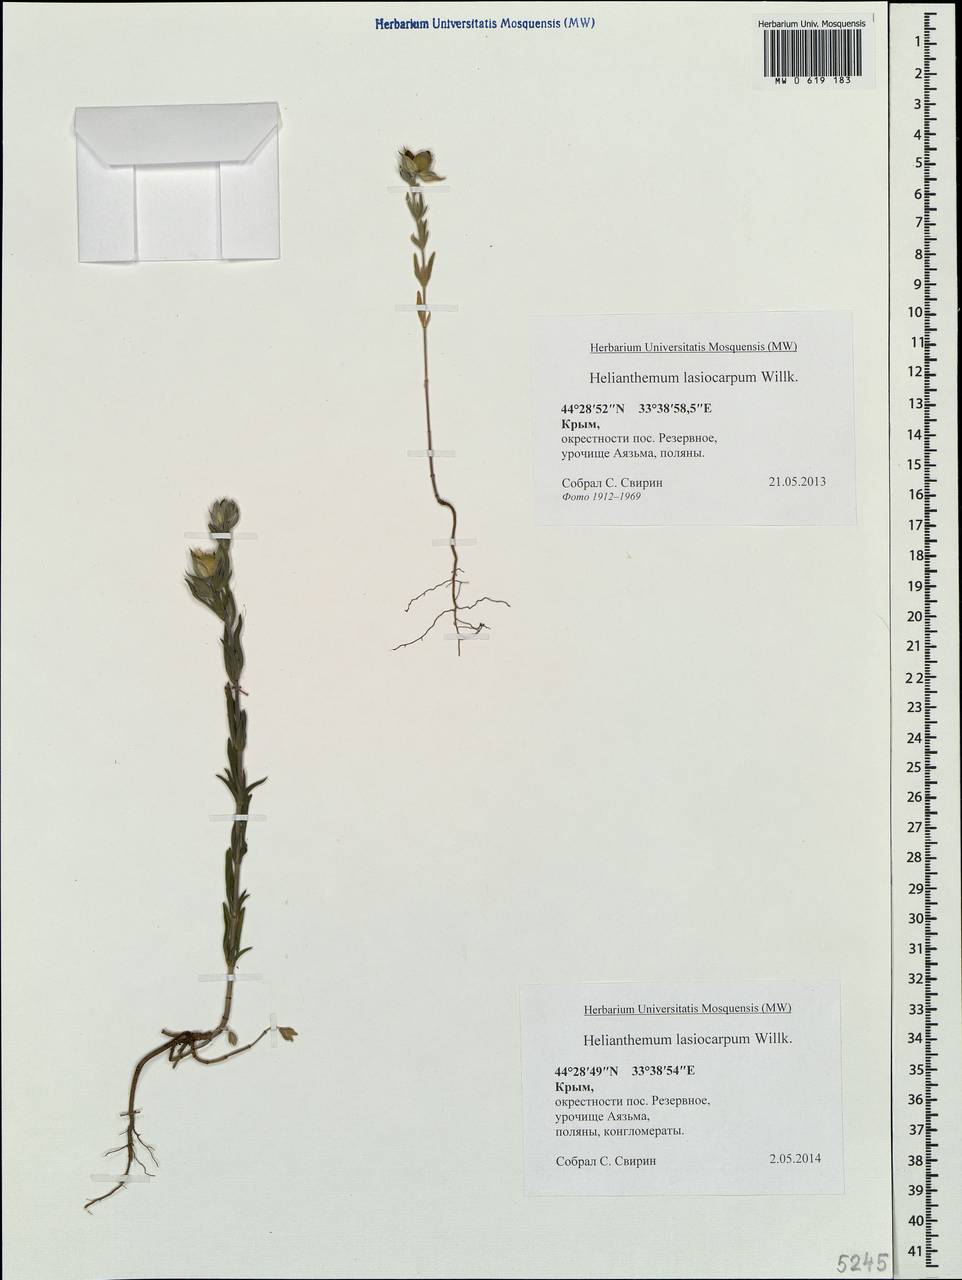 Helianthemum ledifolium subsp. lasiocarpum (Jacques & Herincq) Nyman, Крым (KRYM) (Россия)